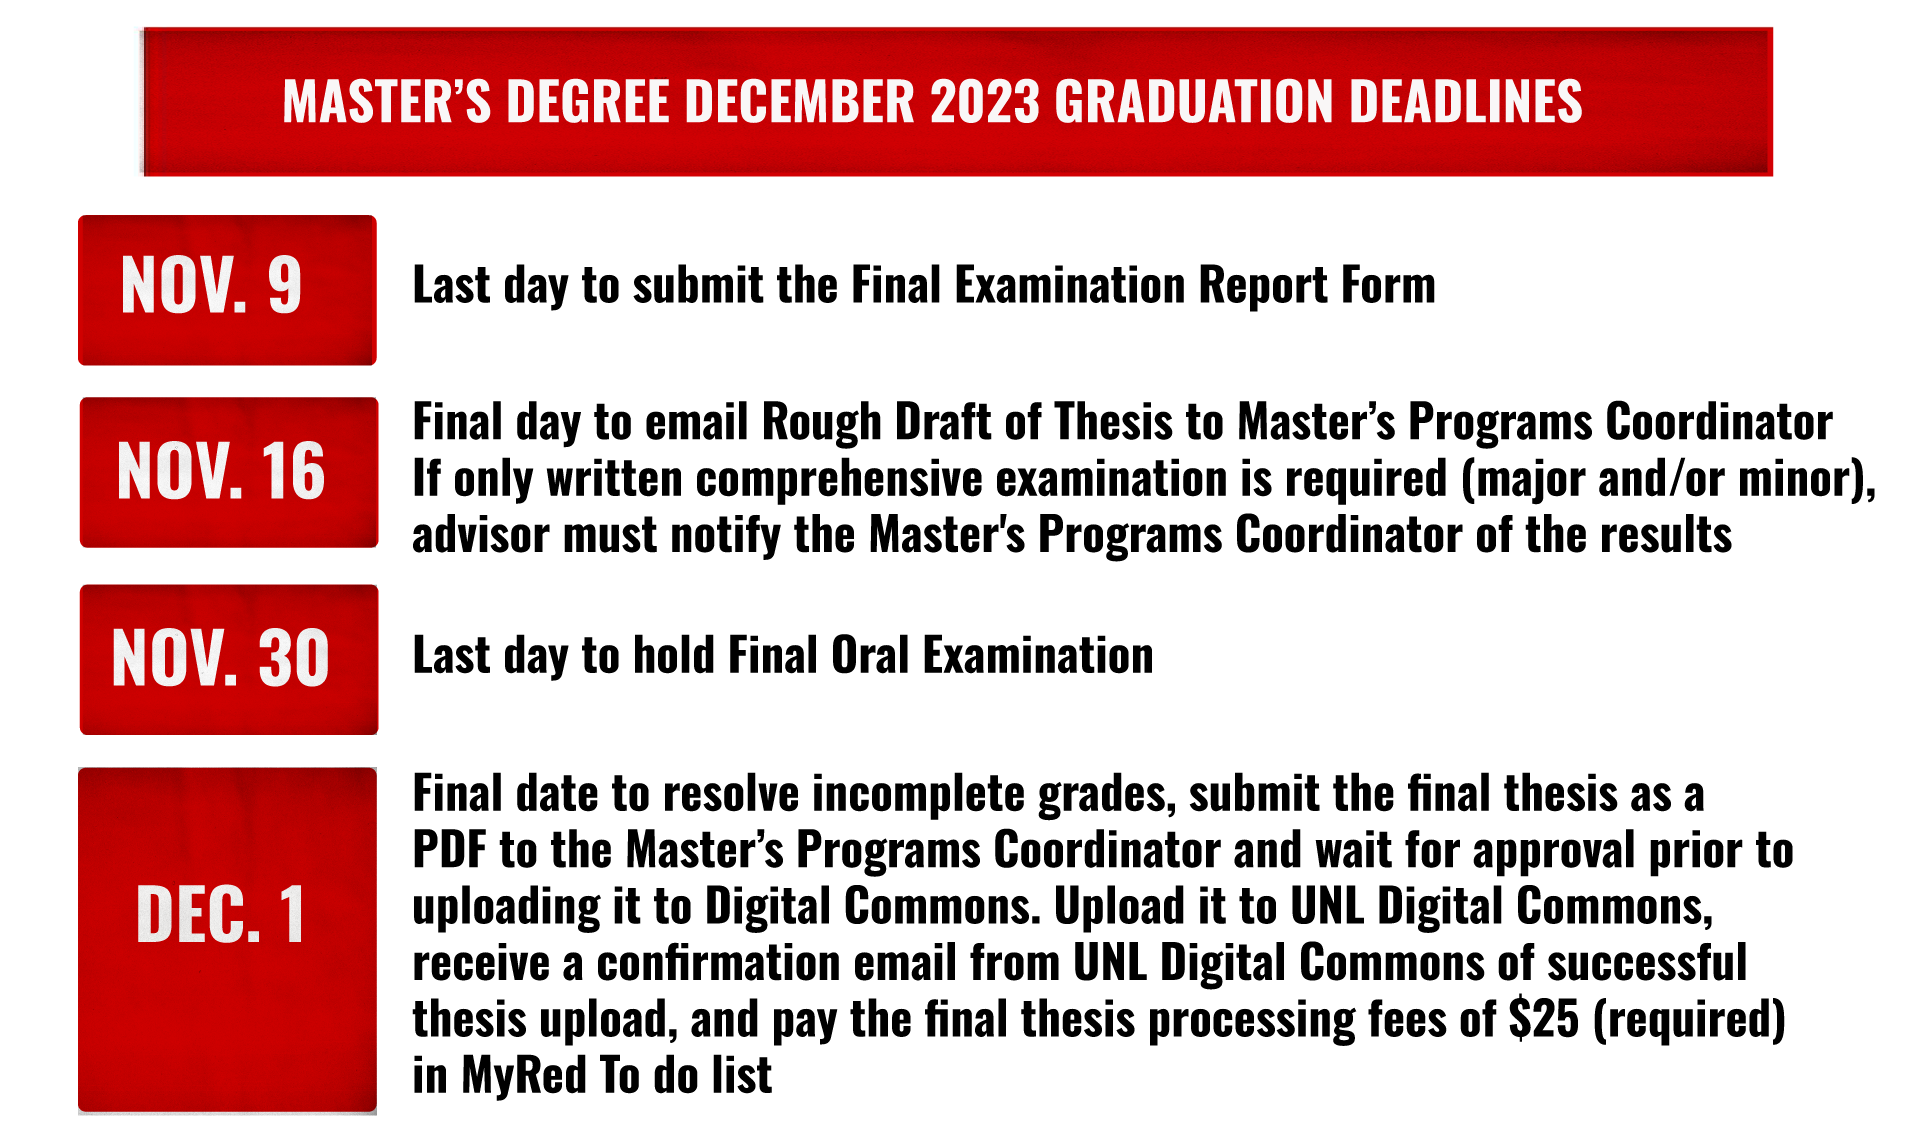 Masters Degree December 2023 Graduation Deadlines